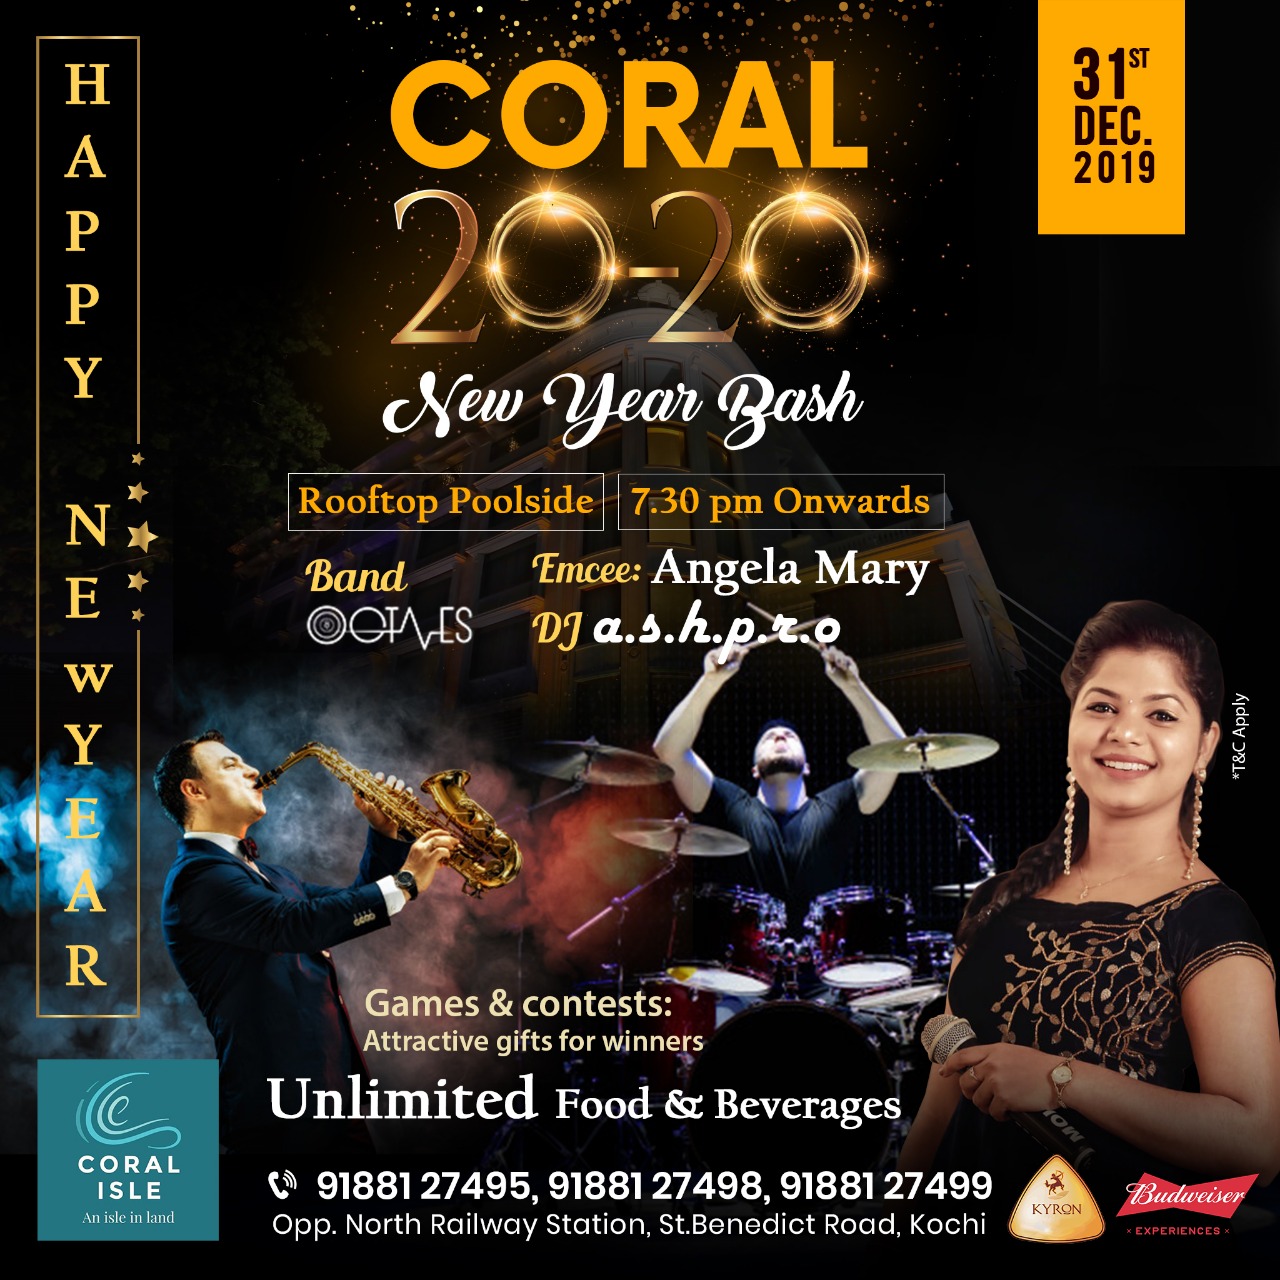 New Year Party Kochi 2020 - DJ ashpro Emcee - Coral Isle Hotel